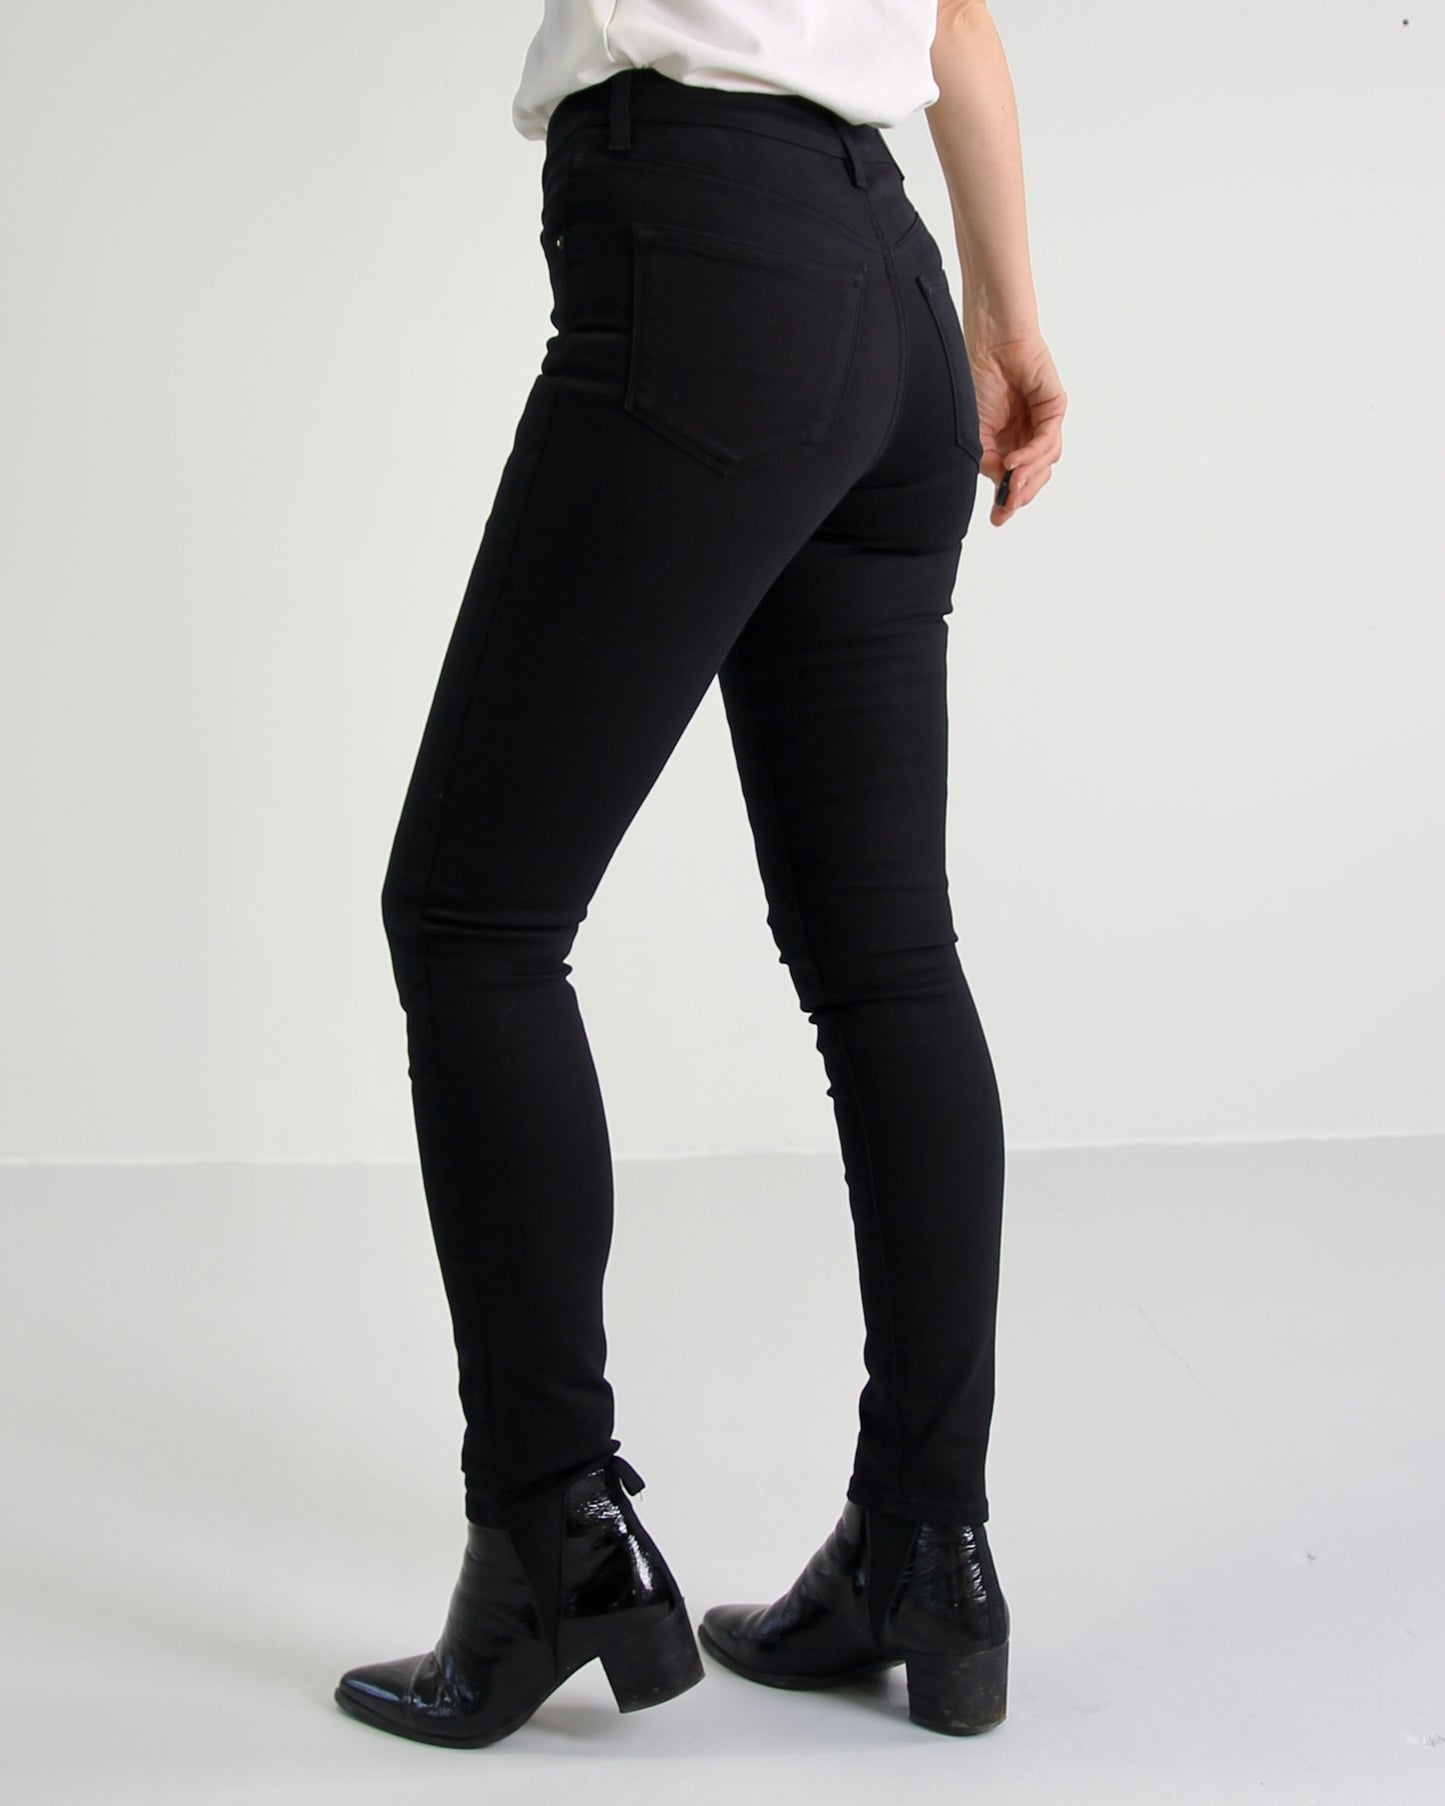 Ayla Black Jeans - Dame - Slim  - High waist - Stretchy